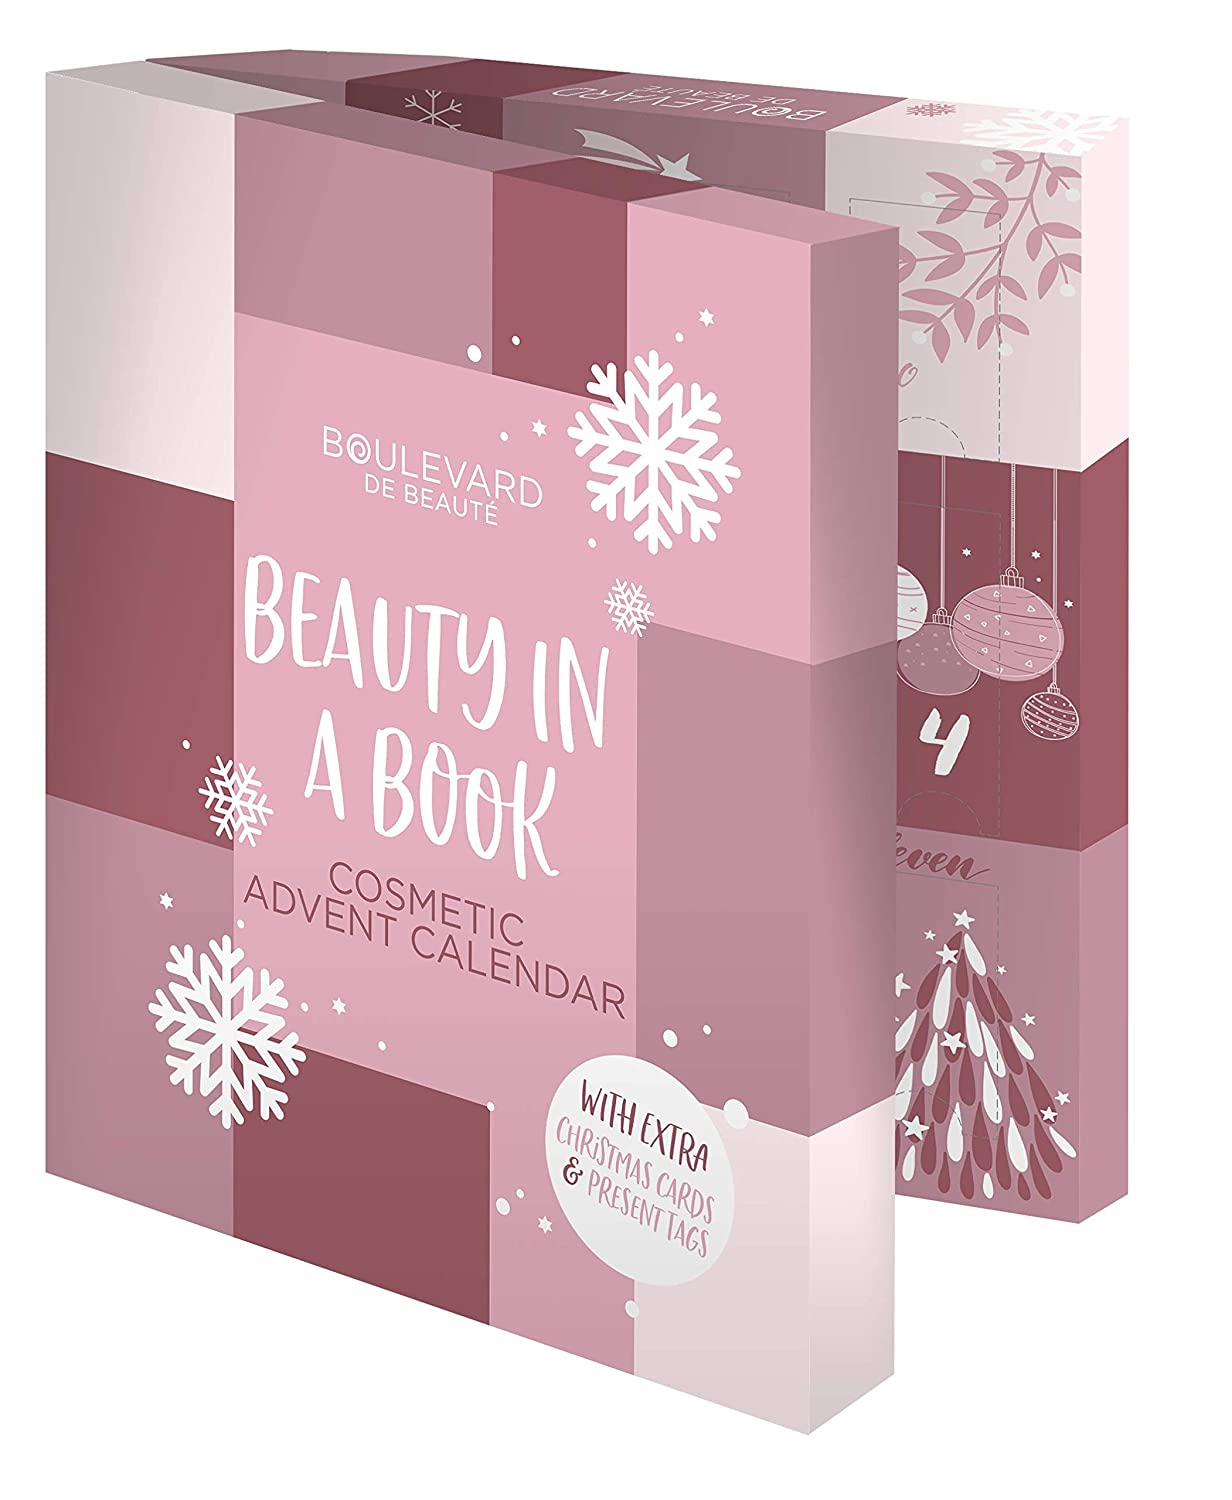 Adventskalender Book Beauté Beauty 2020 – Advents de Boulevard in a –